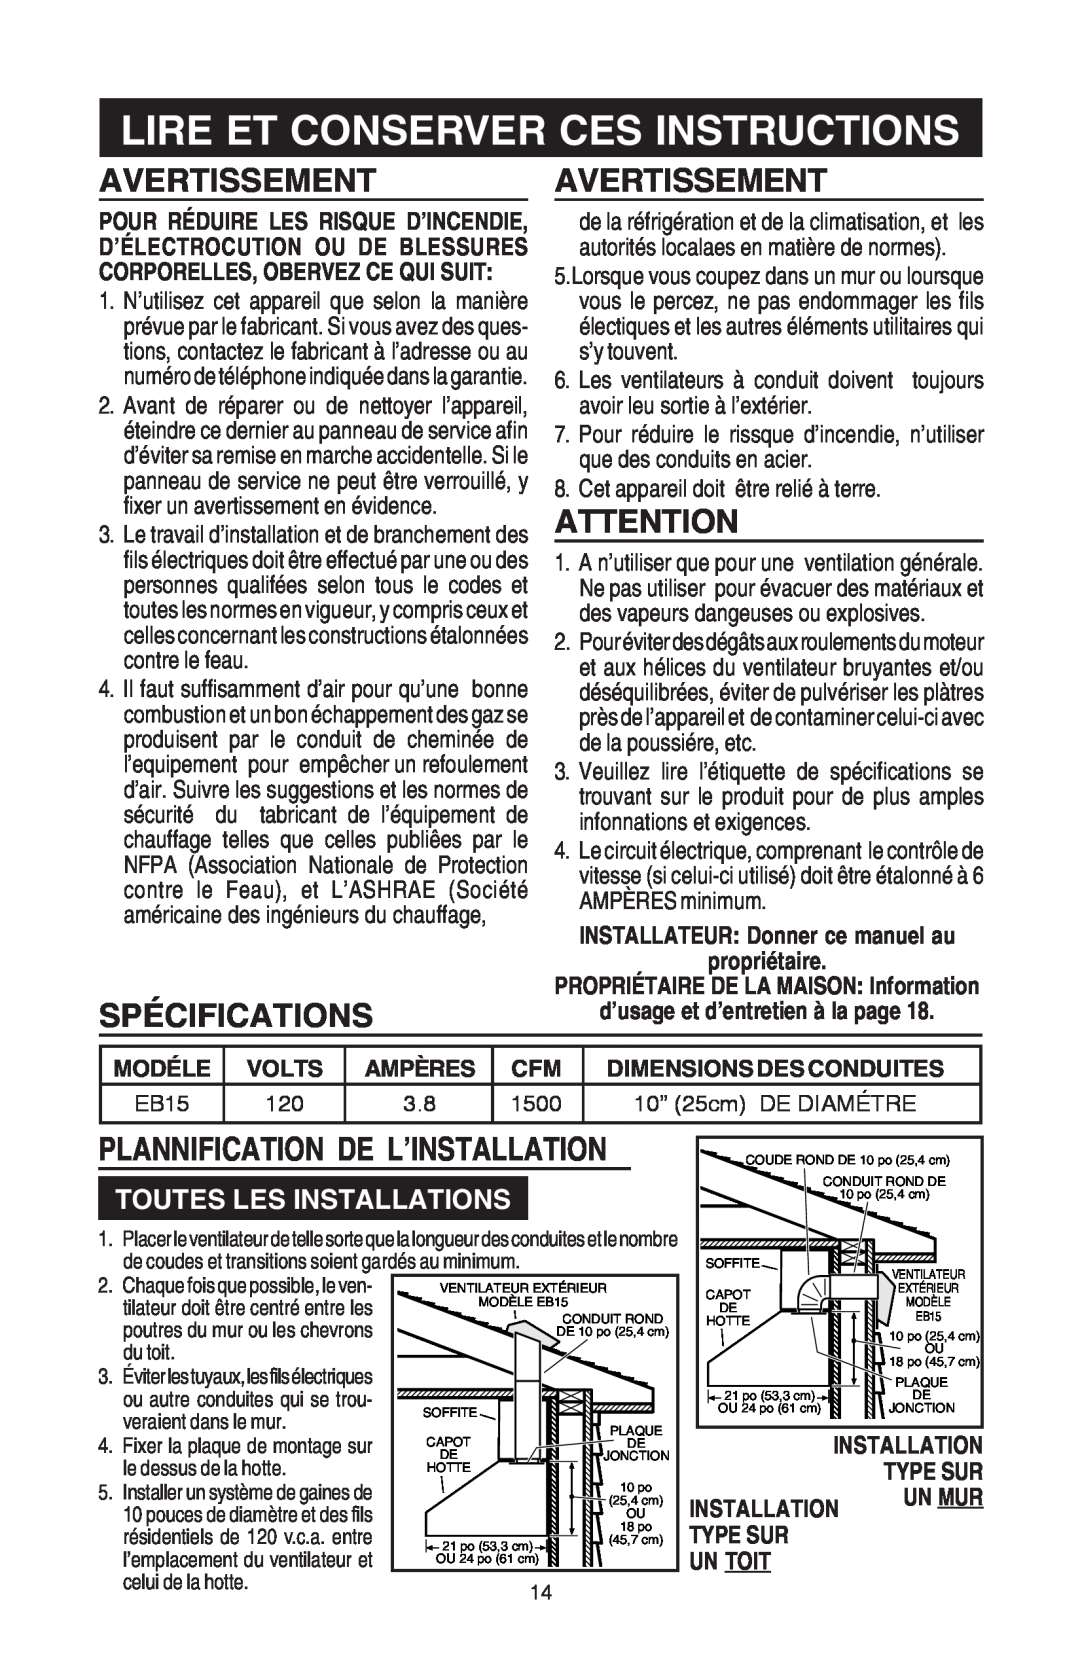 Broan EB15 manual Avertissement, Spécifications, Plannification De L’Installation, Toutes Les Installations 